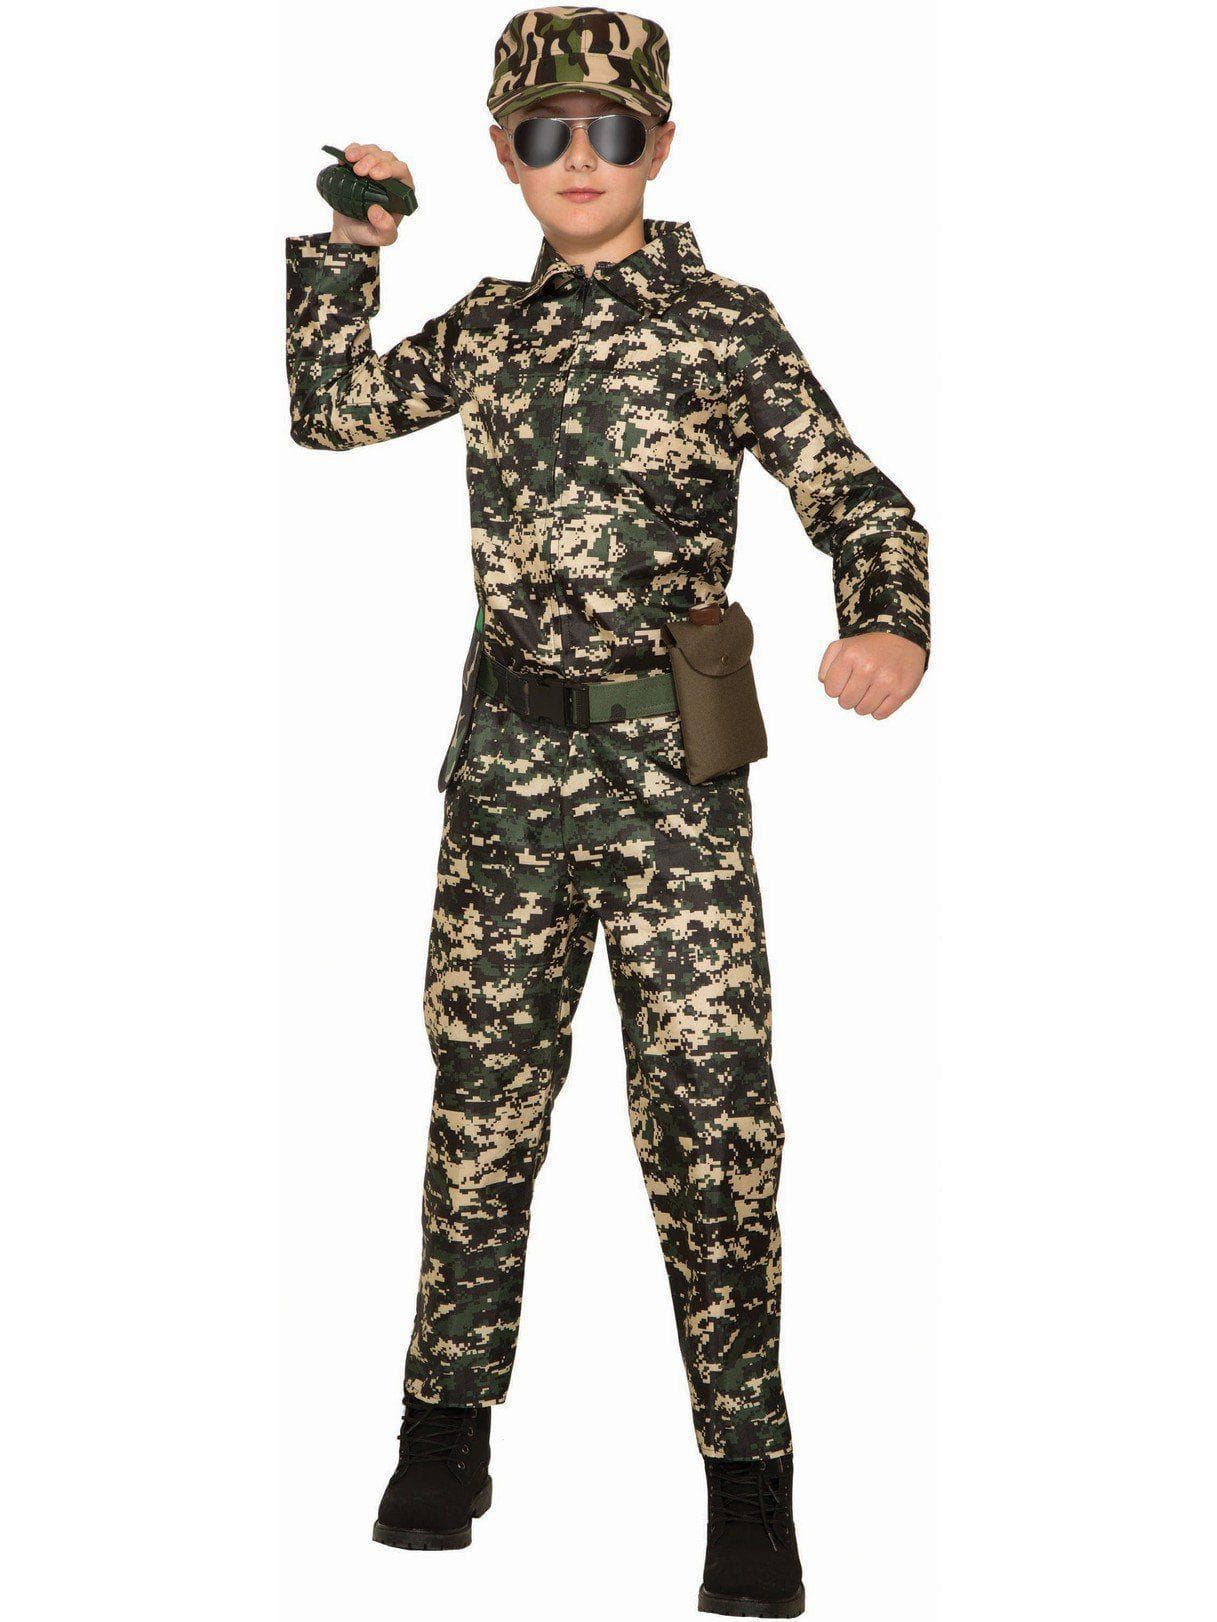 Kid's Army Jumpsuit Costume - costumes.com